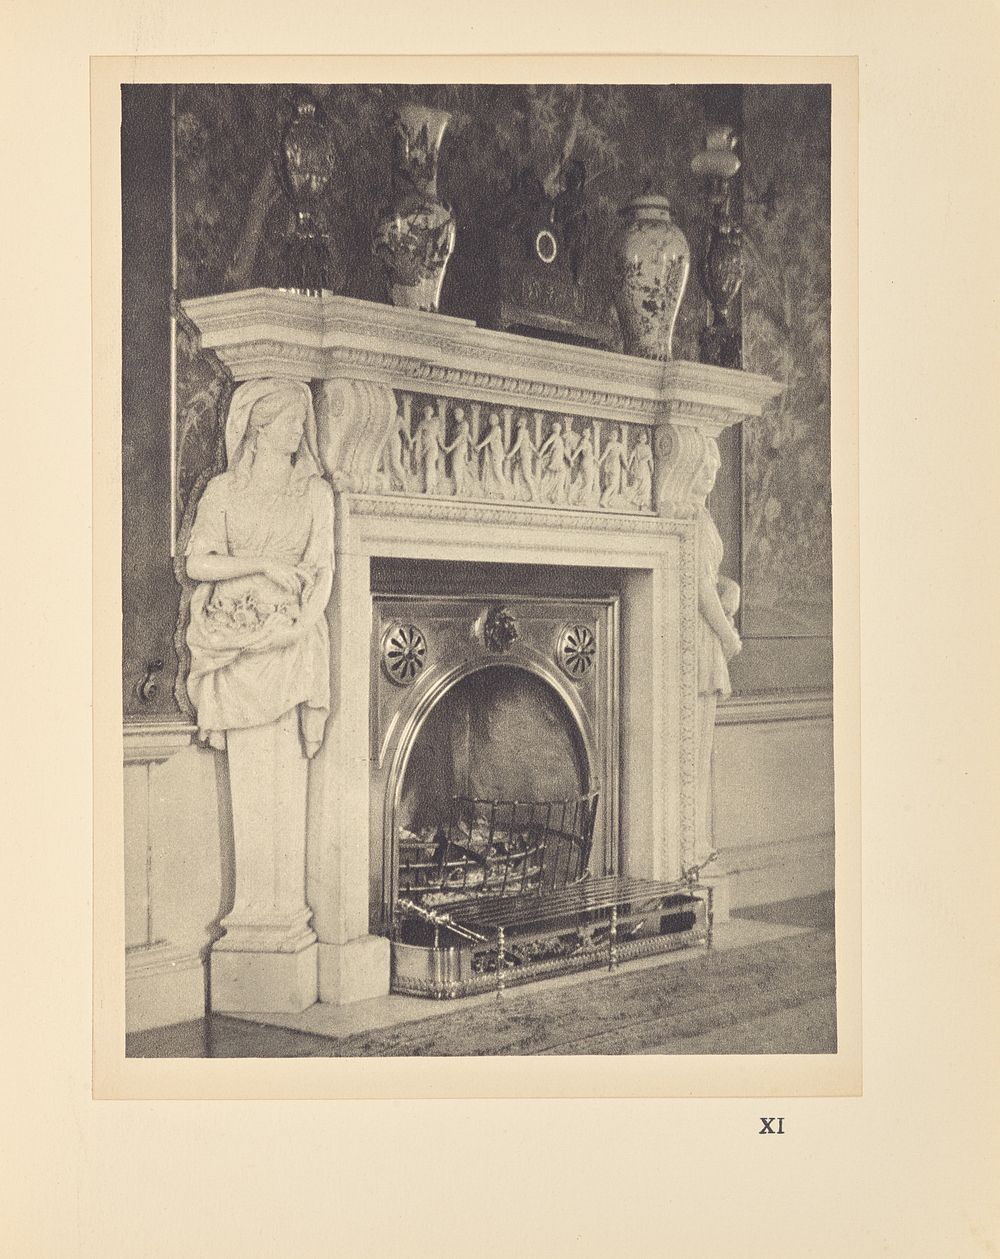 The Italian Fireplace by Alvin Langdon Coburn